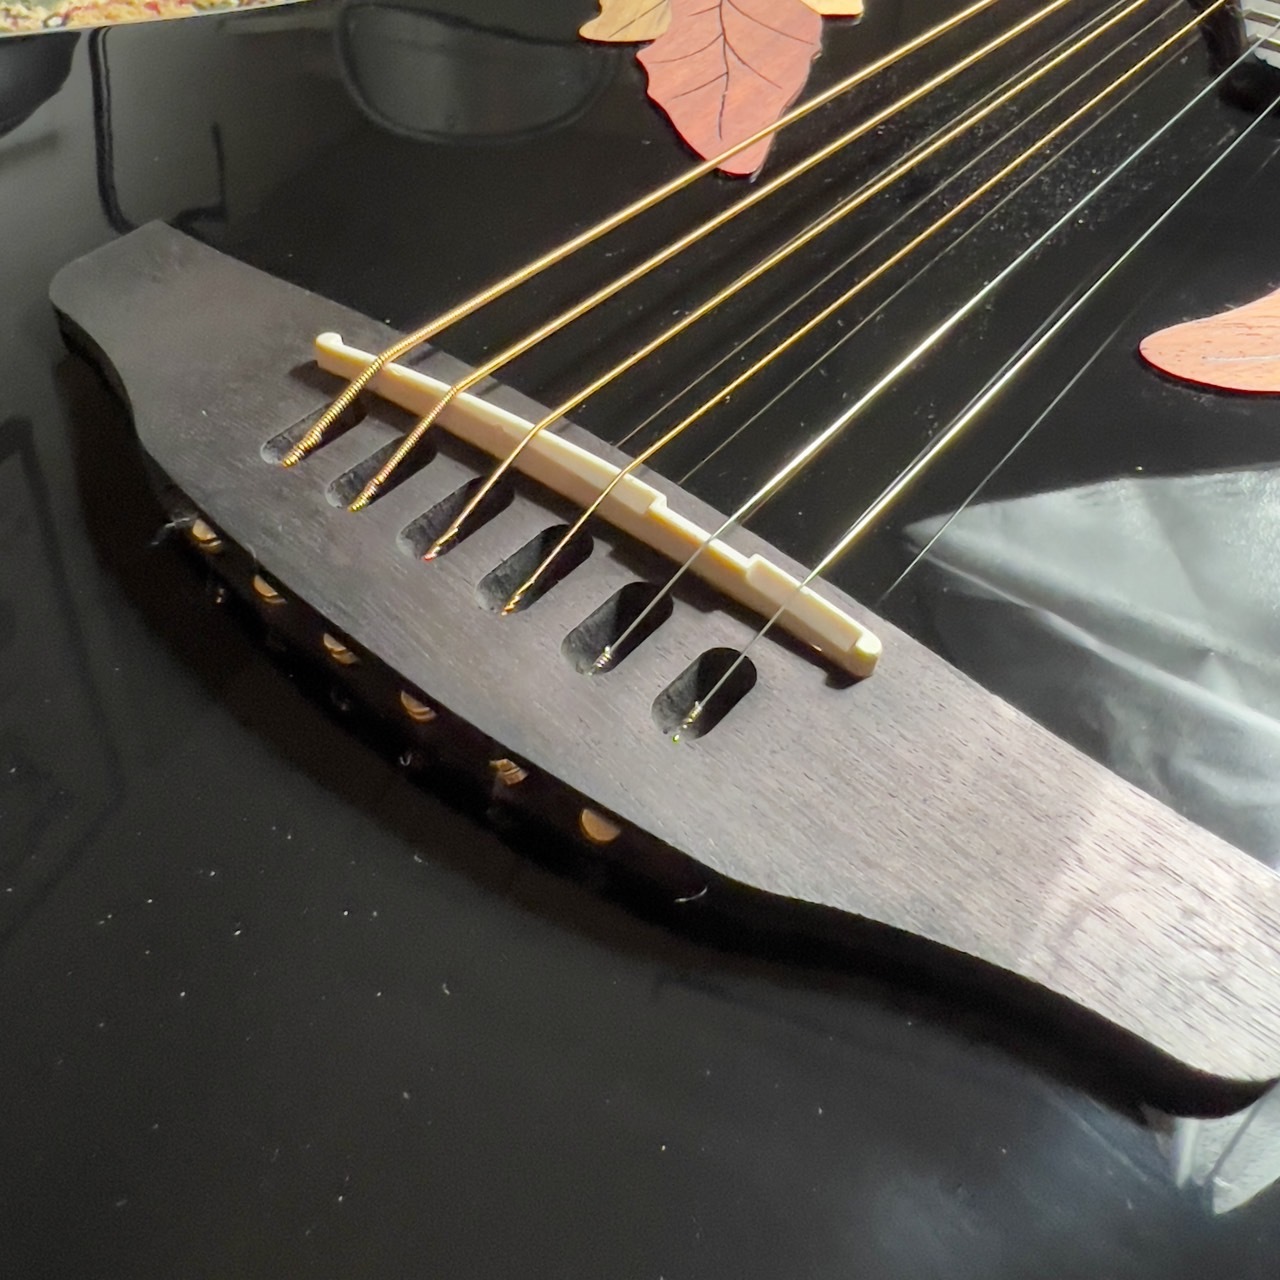 Ovation CE G BLK エレアコギター新品特価/送料無料楽器検索